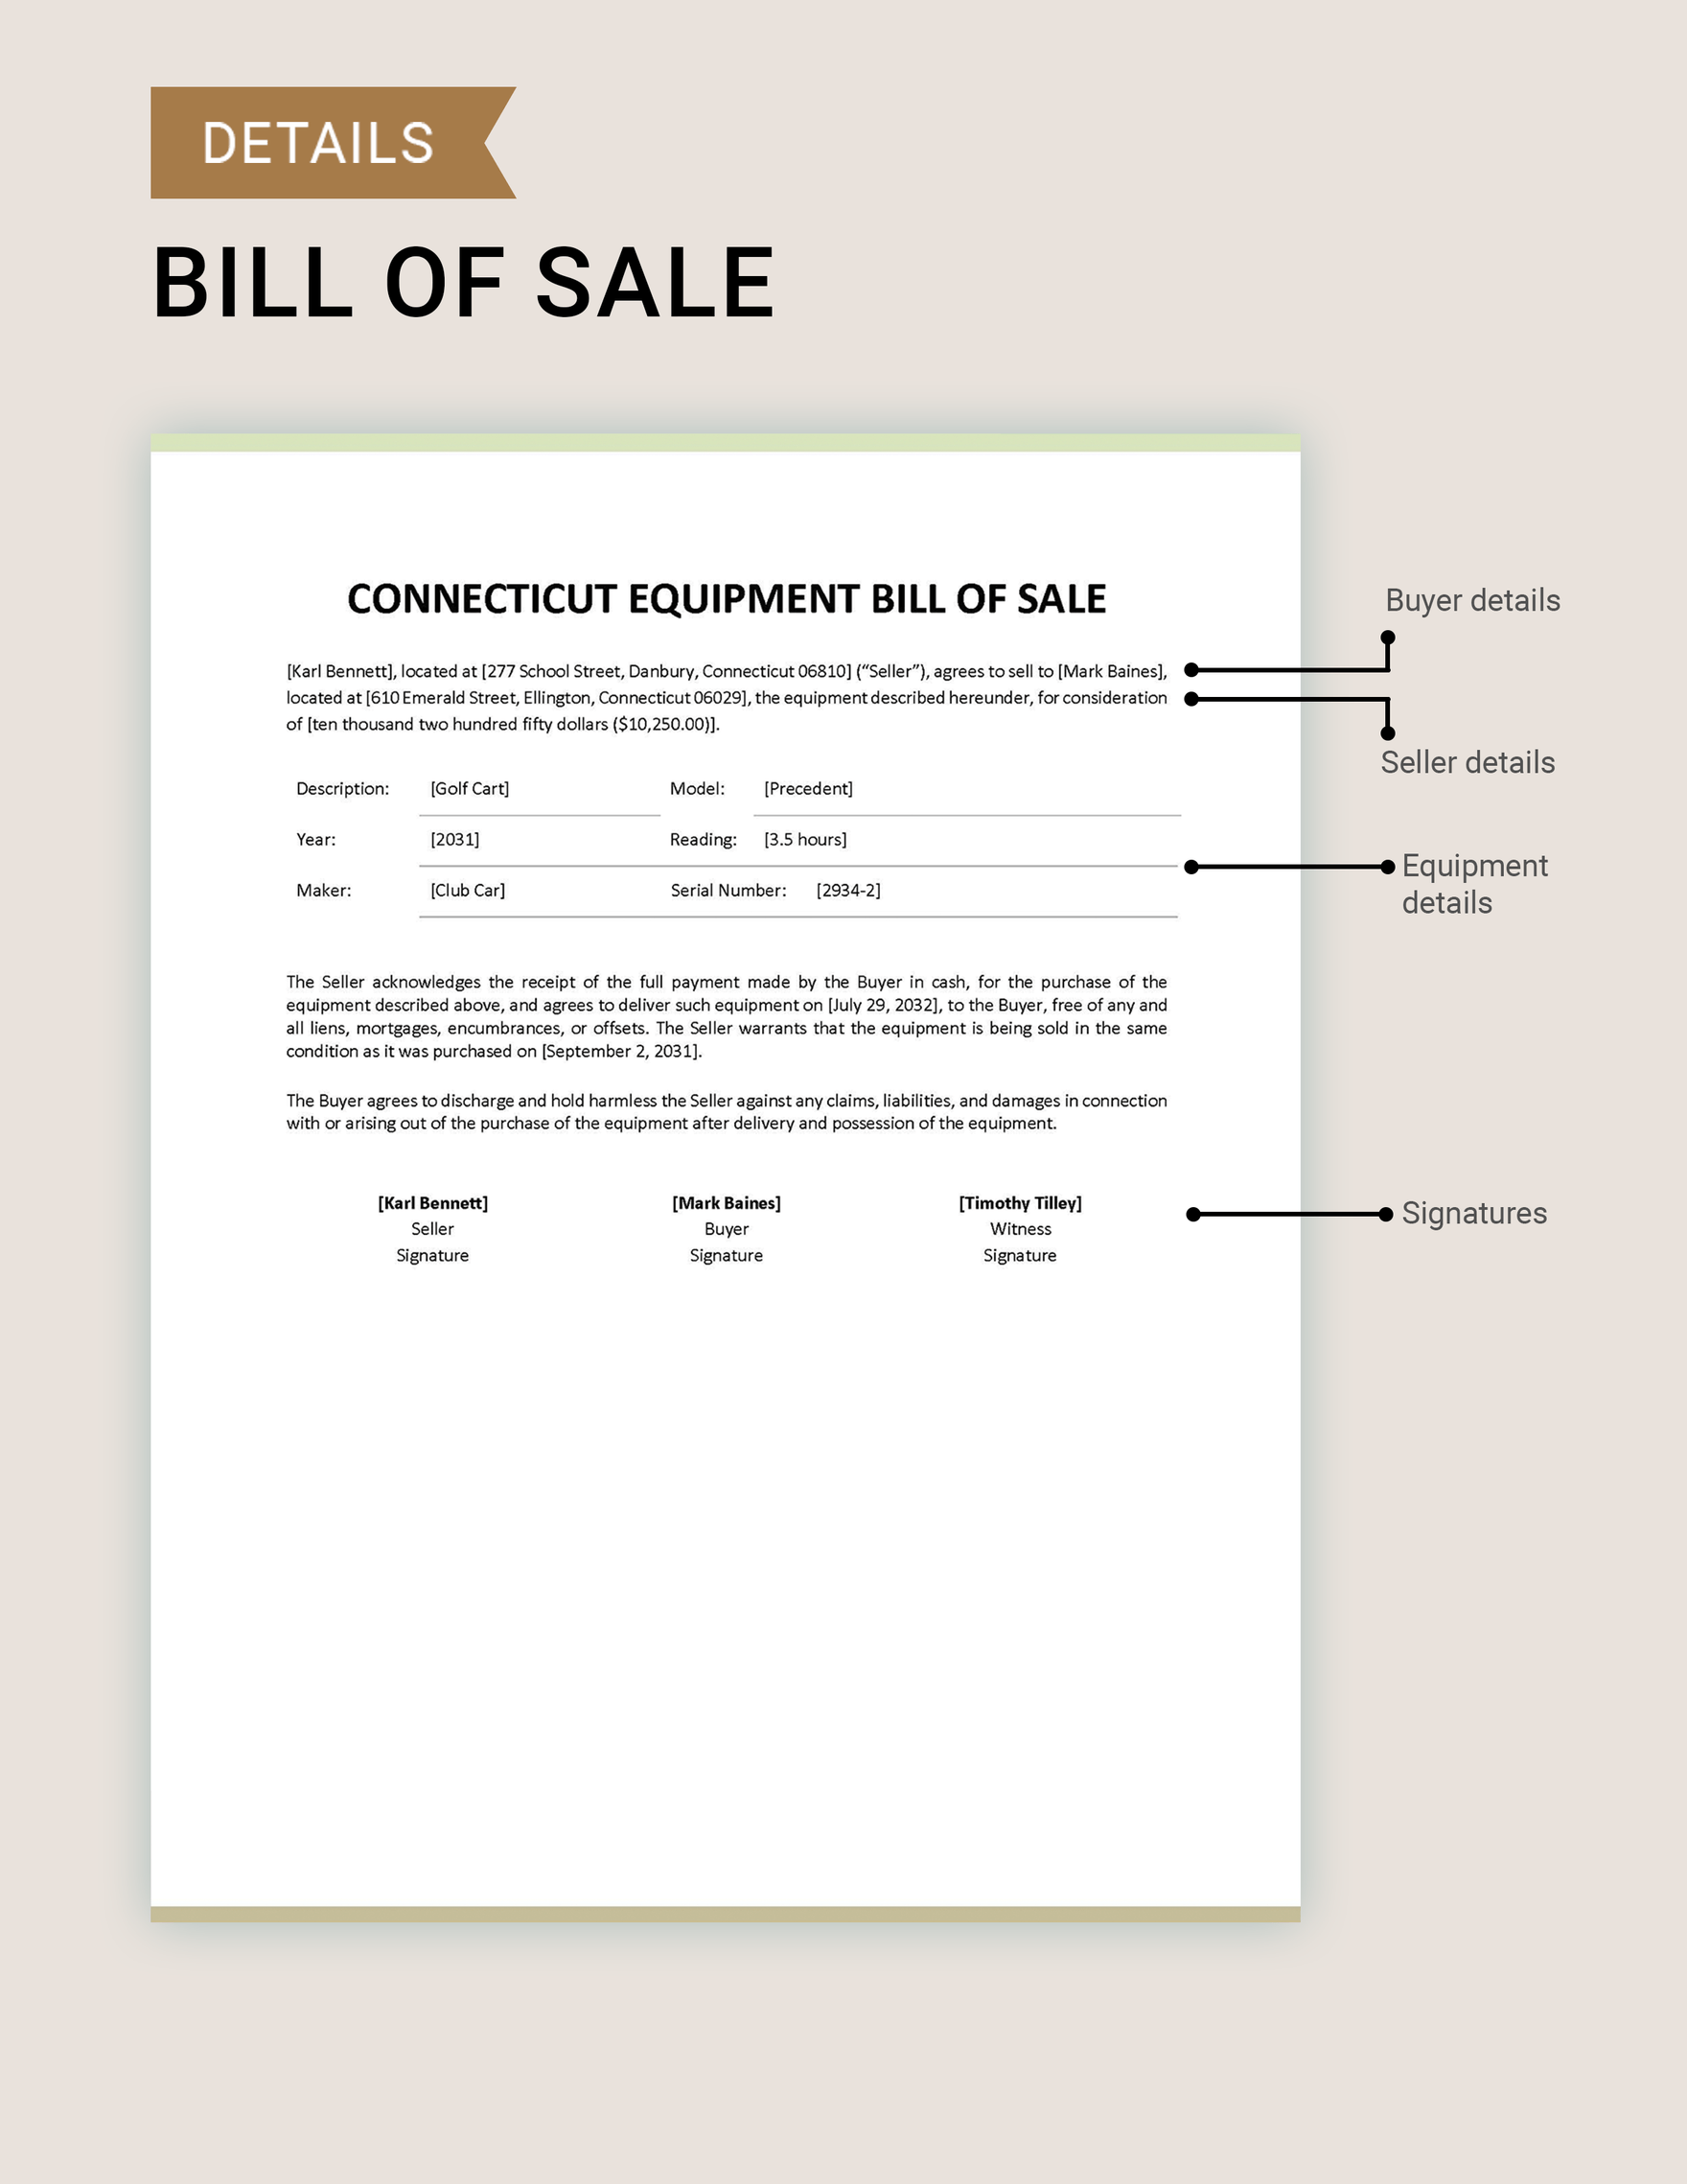 Connecticut Equipment Bill of Sale Template